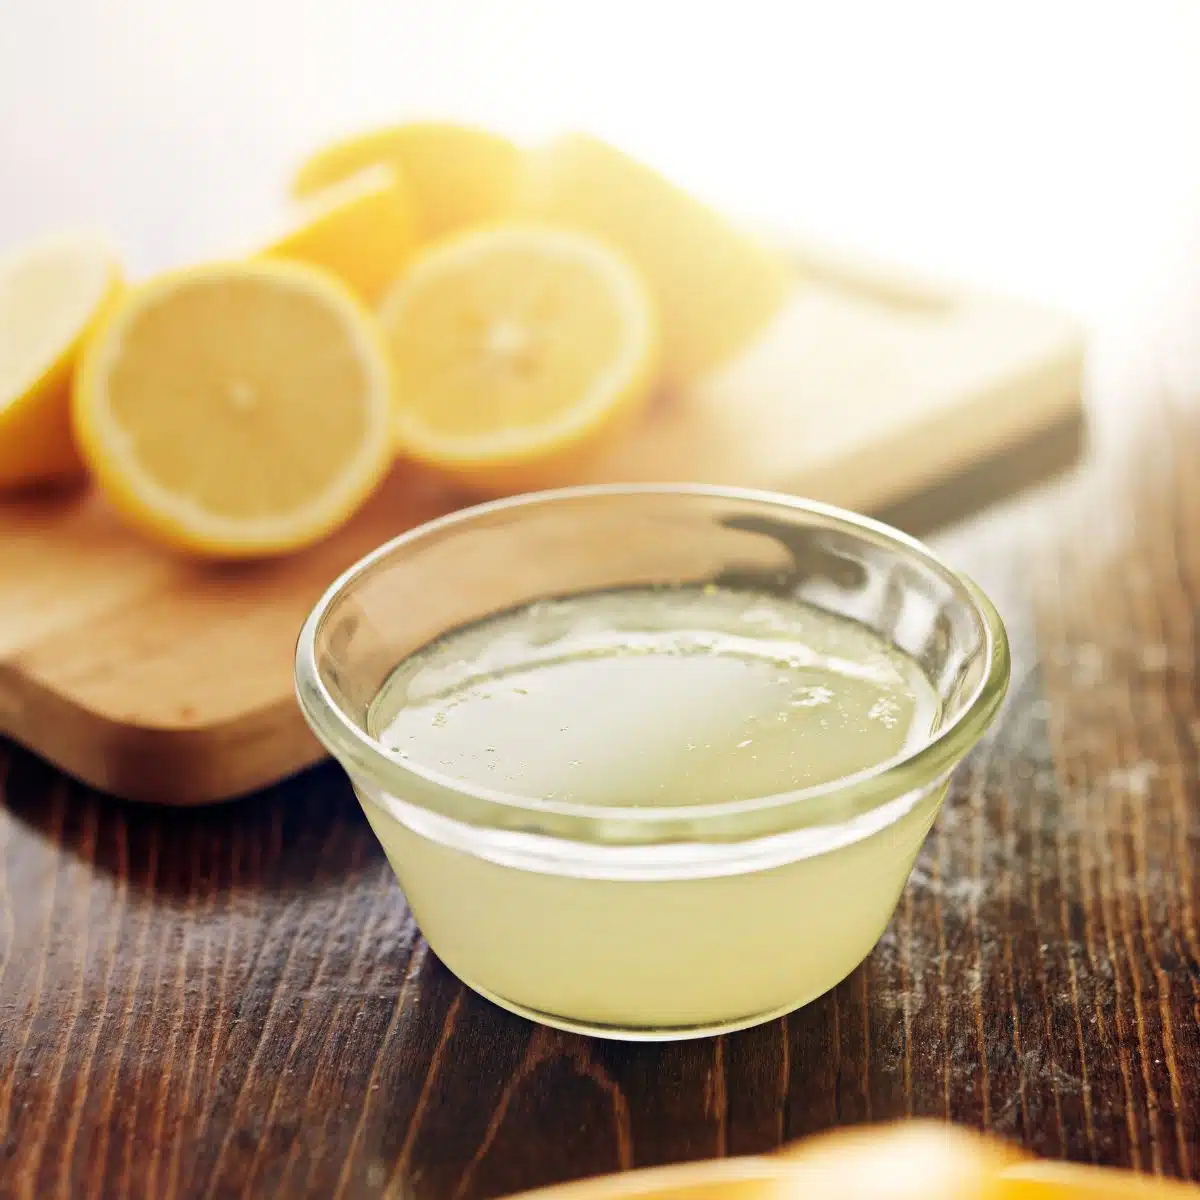 Square image showing lemons and lemon juice.